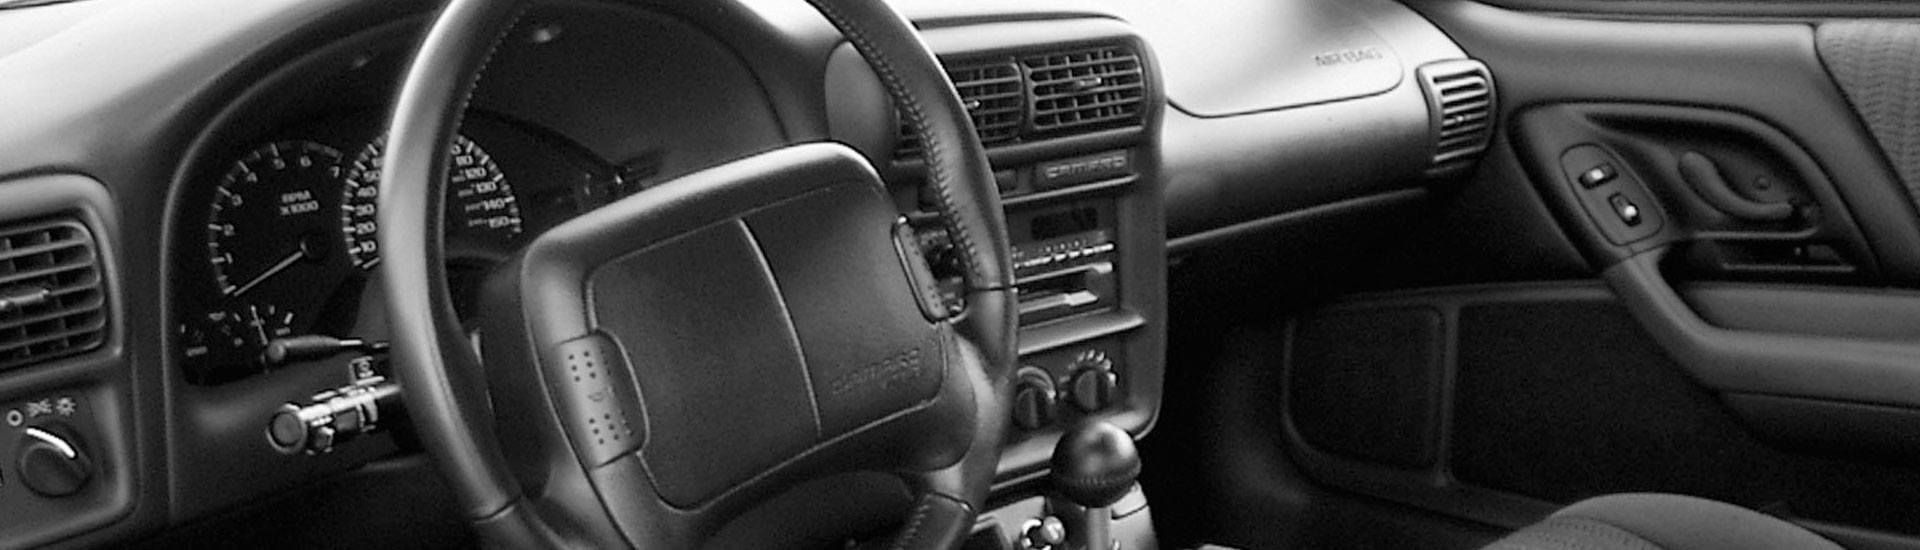 https://www.rvinyl.com/images/1998-Chevrolet-Camaro-Dash-Kits.jpg